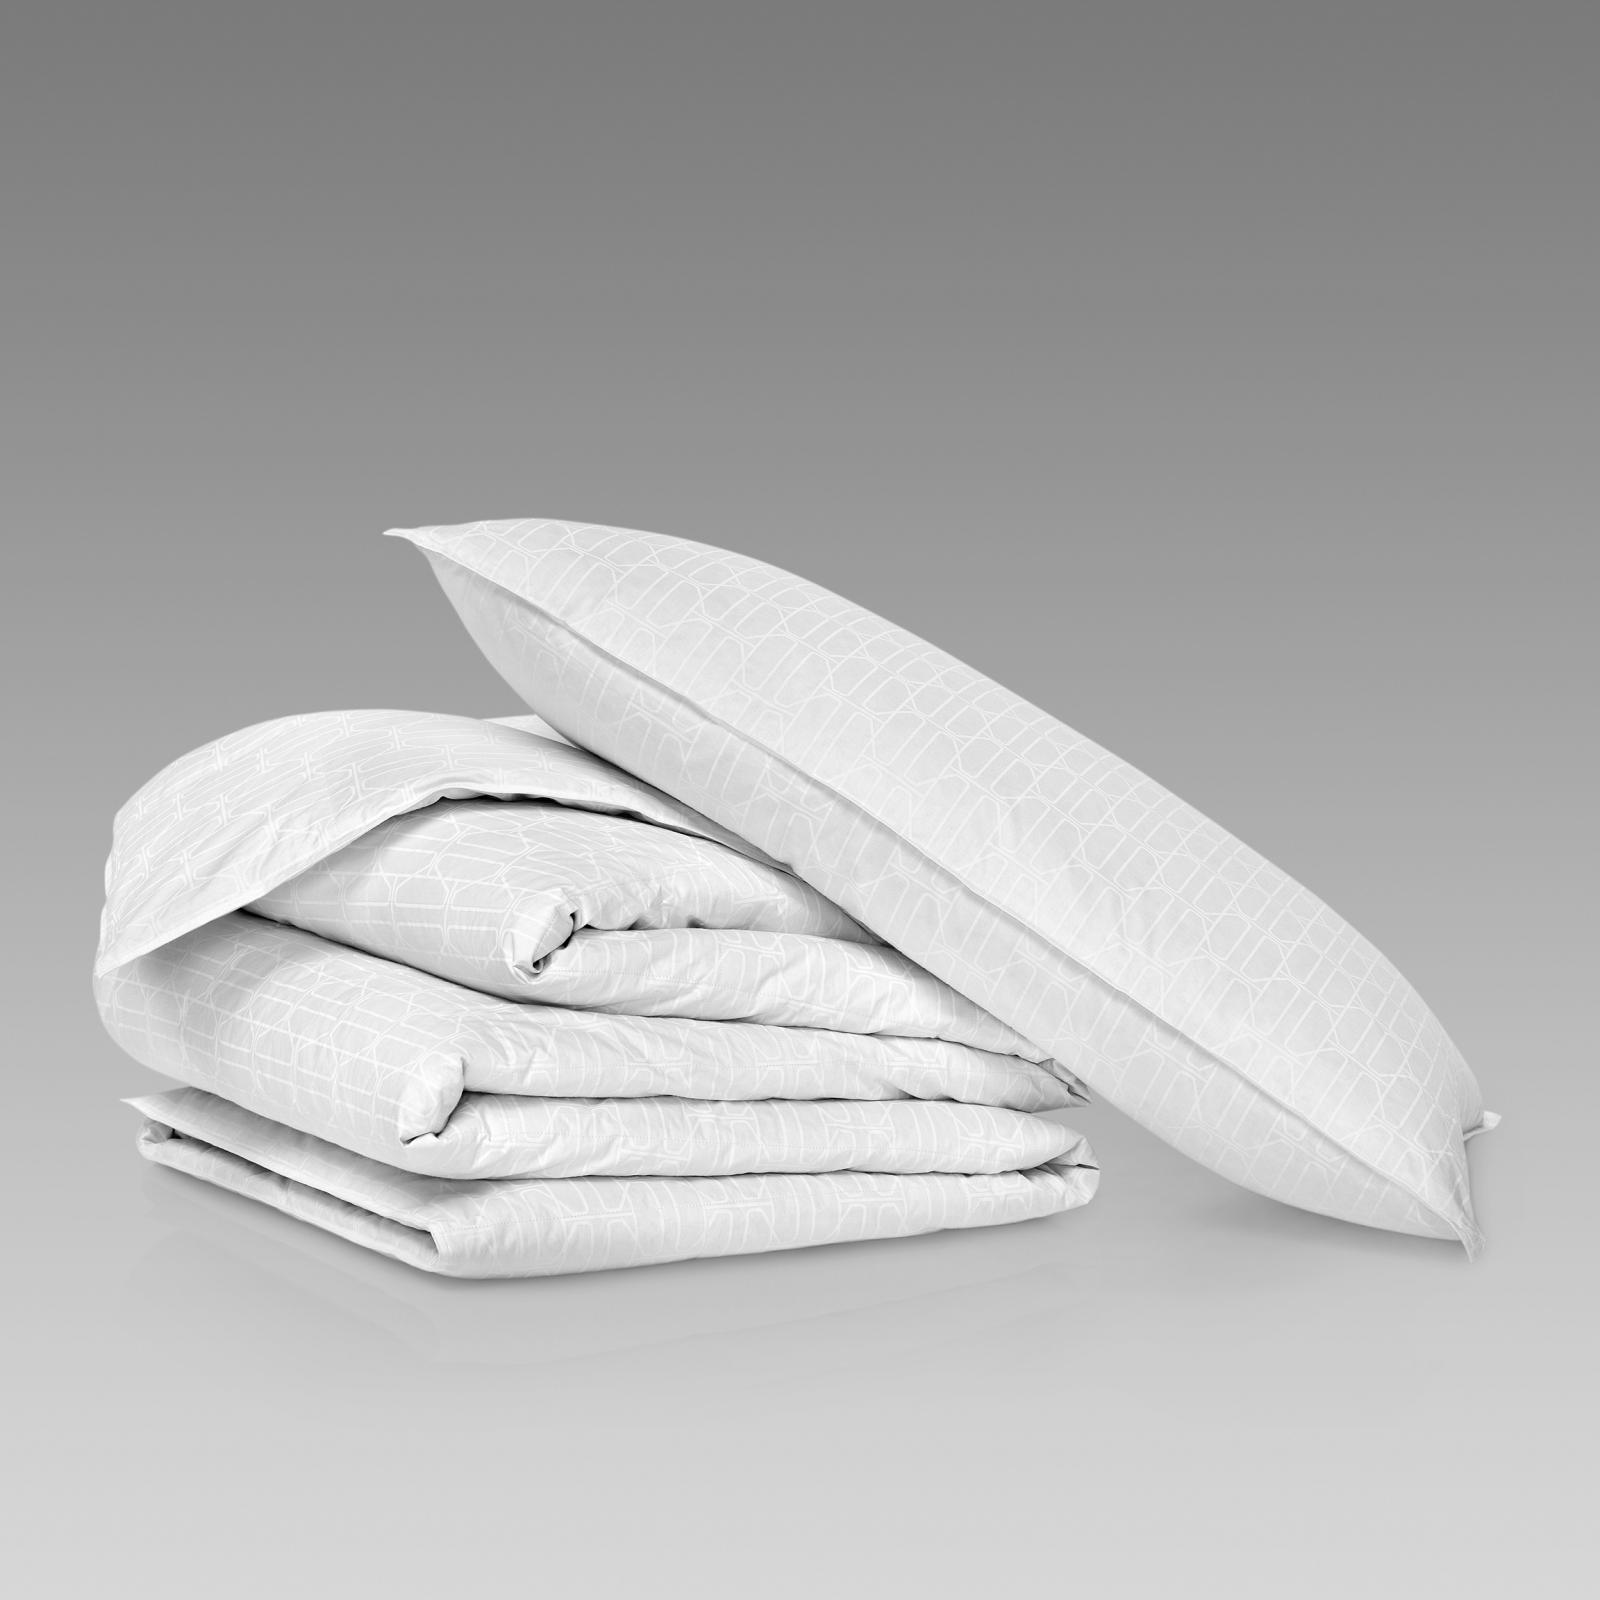 Одеяло Орион Togas 140х200, размер 140х200 см - фото 10